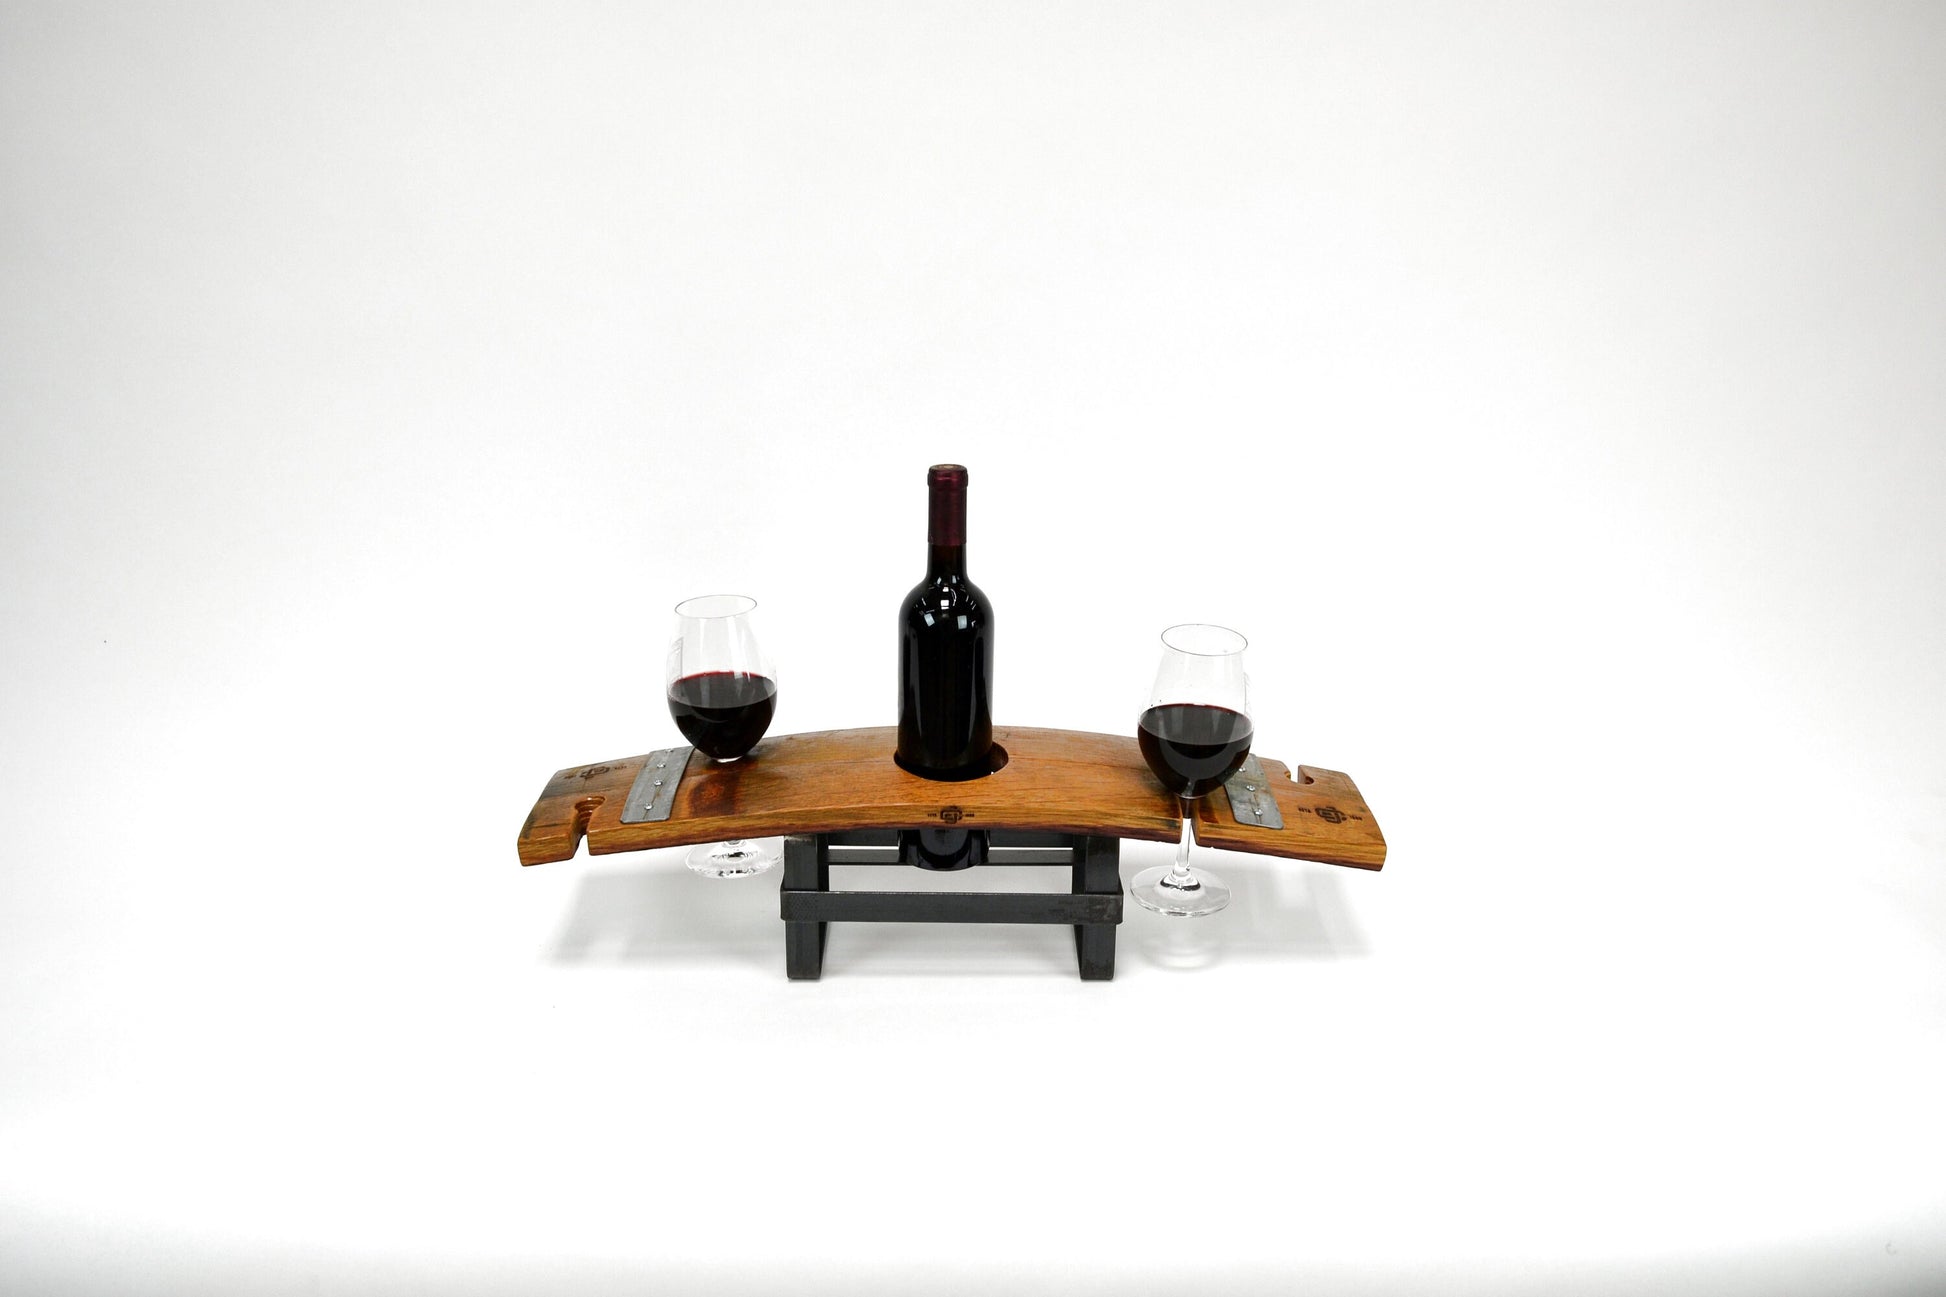 Barrel Stave and Steel Wine Flight - Zabibu - 4 glass wine flight and bottle stand. 100% Recycled!